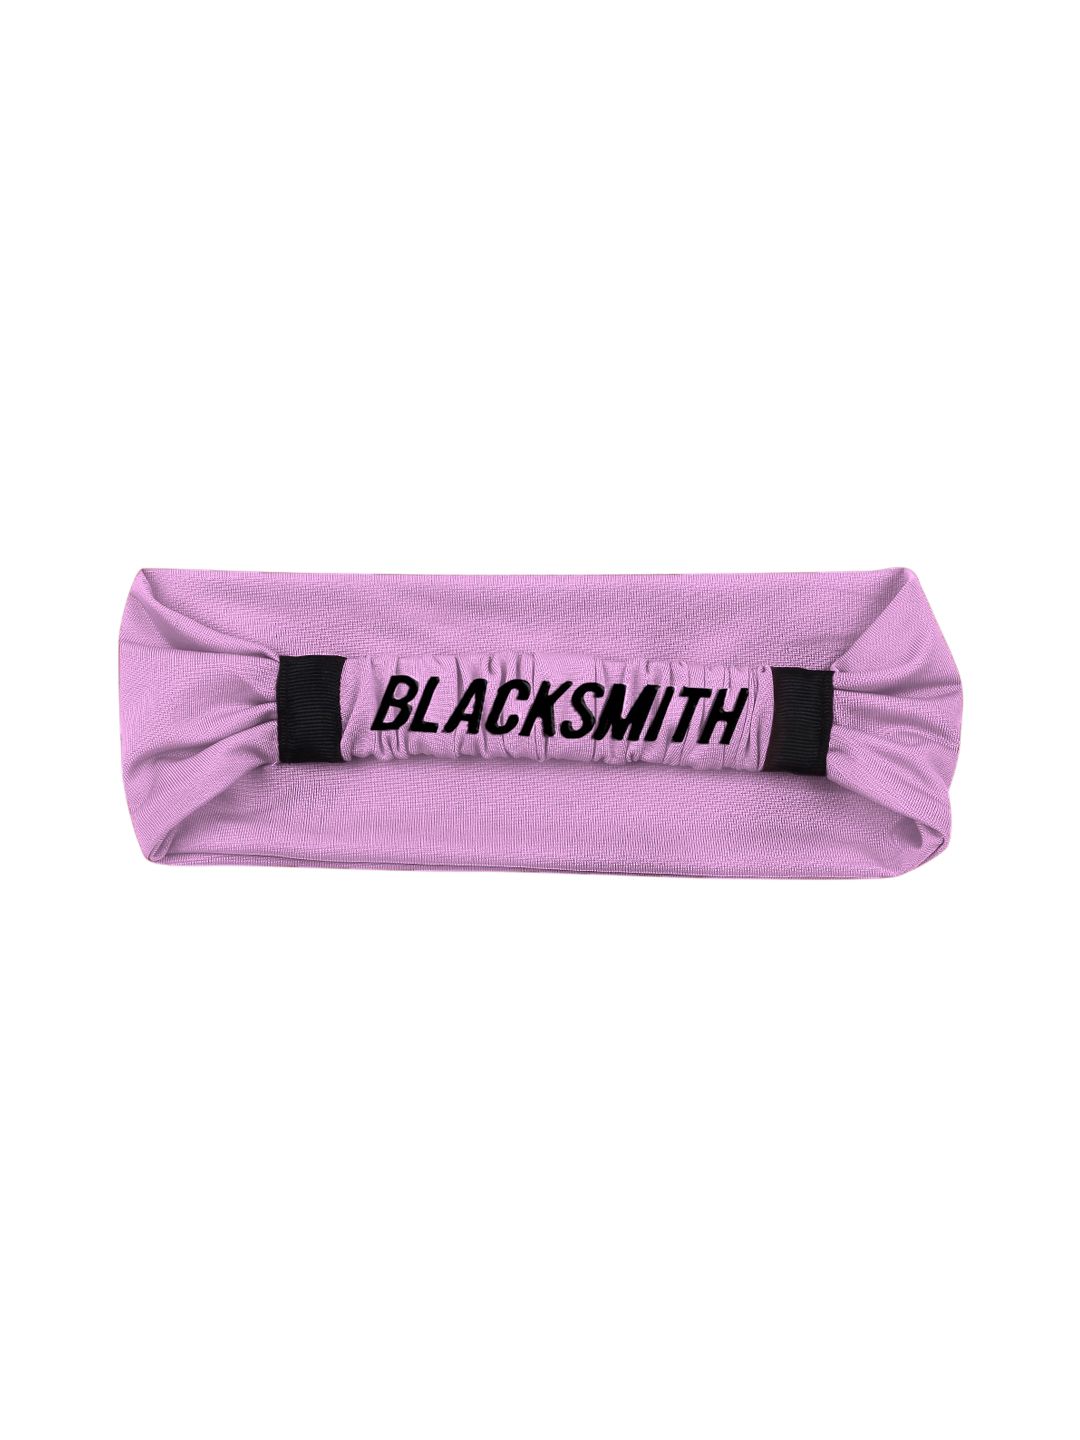 Blacksmith Unisex Purple Solid Sports Headband Price in India